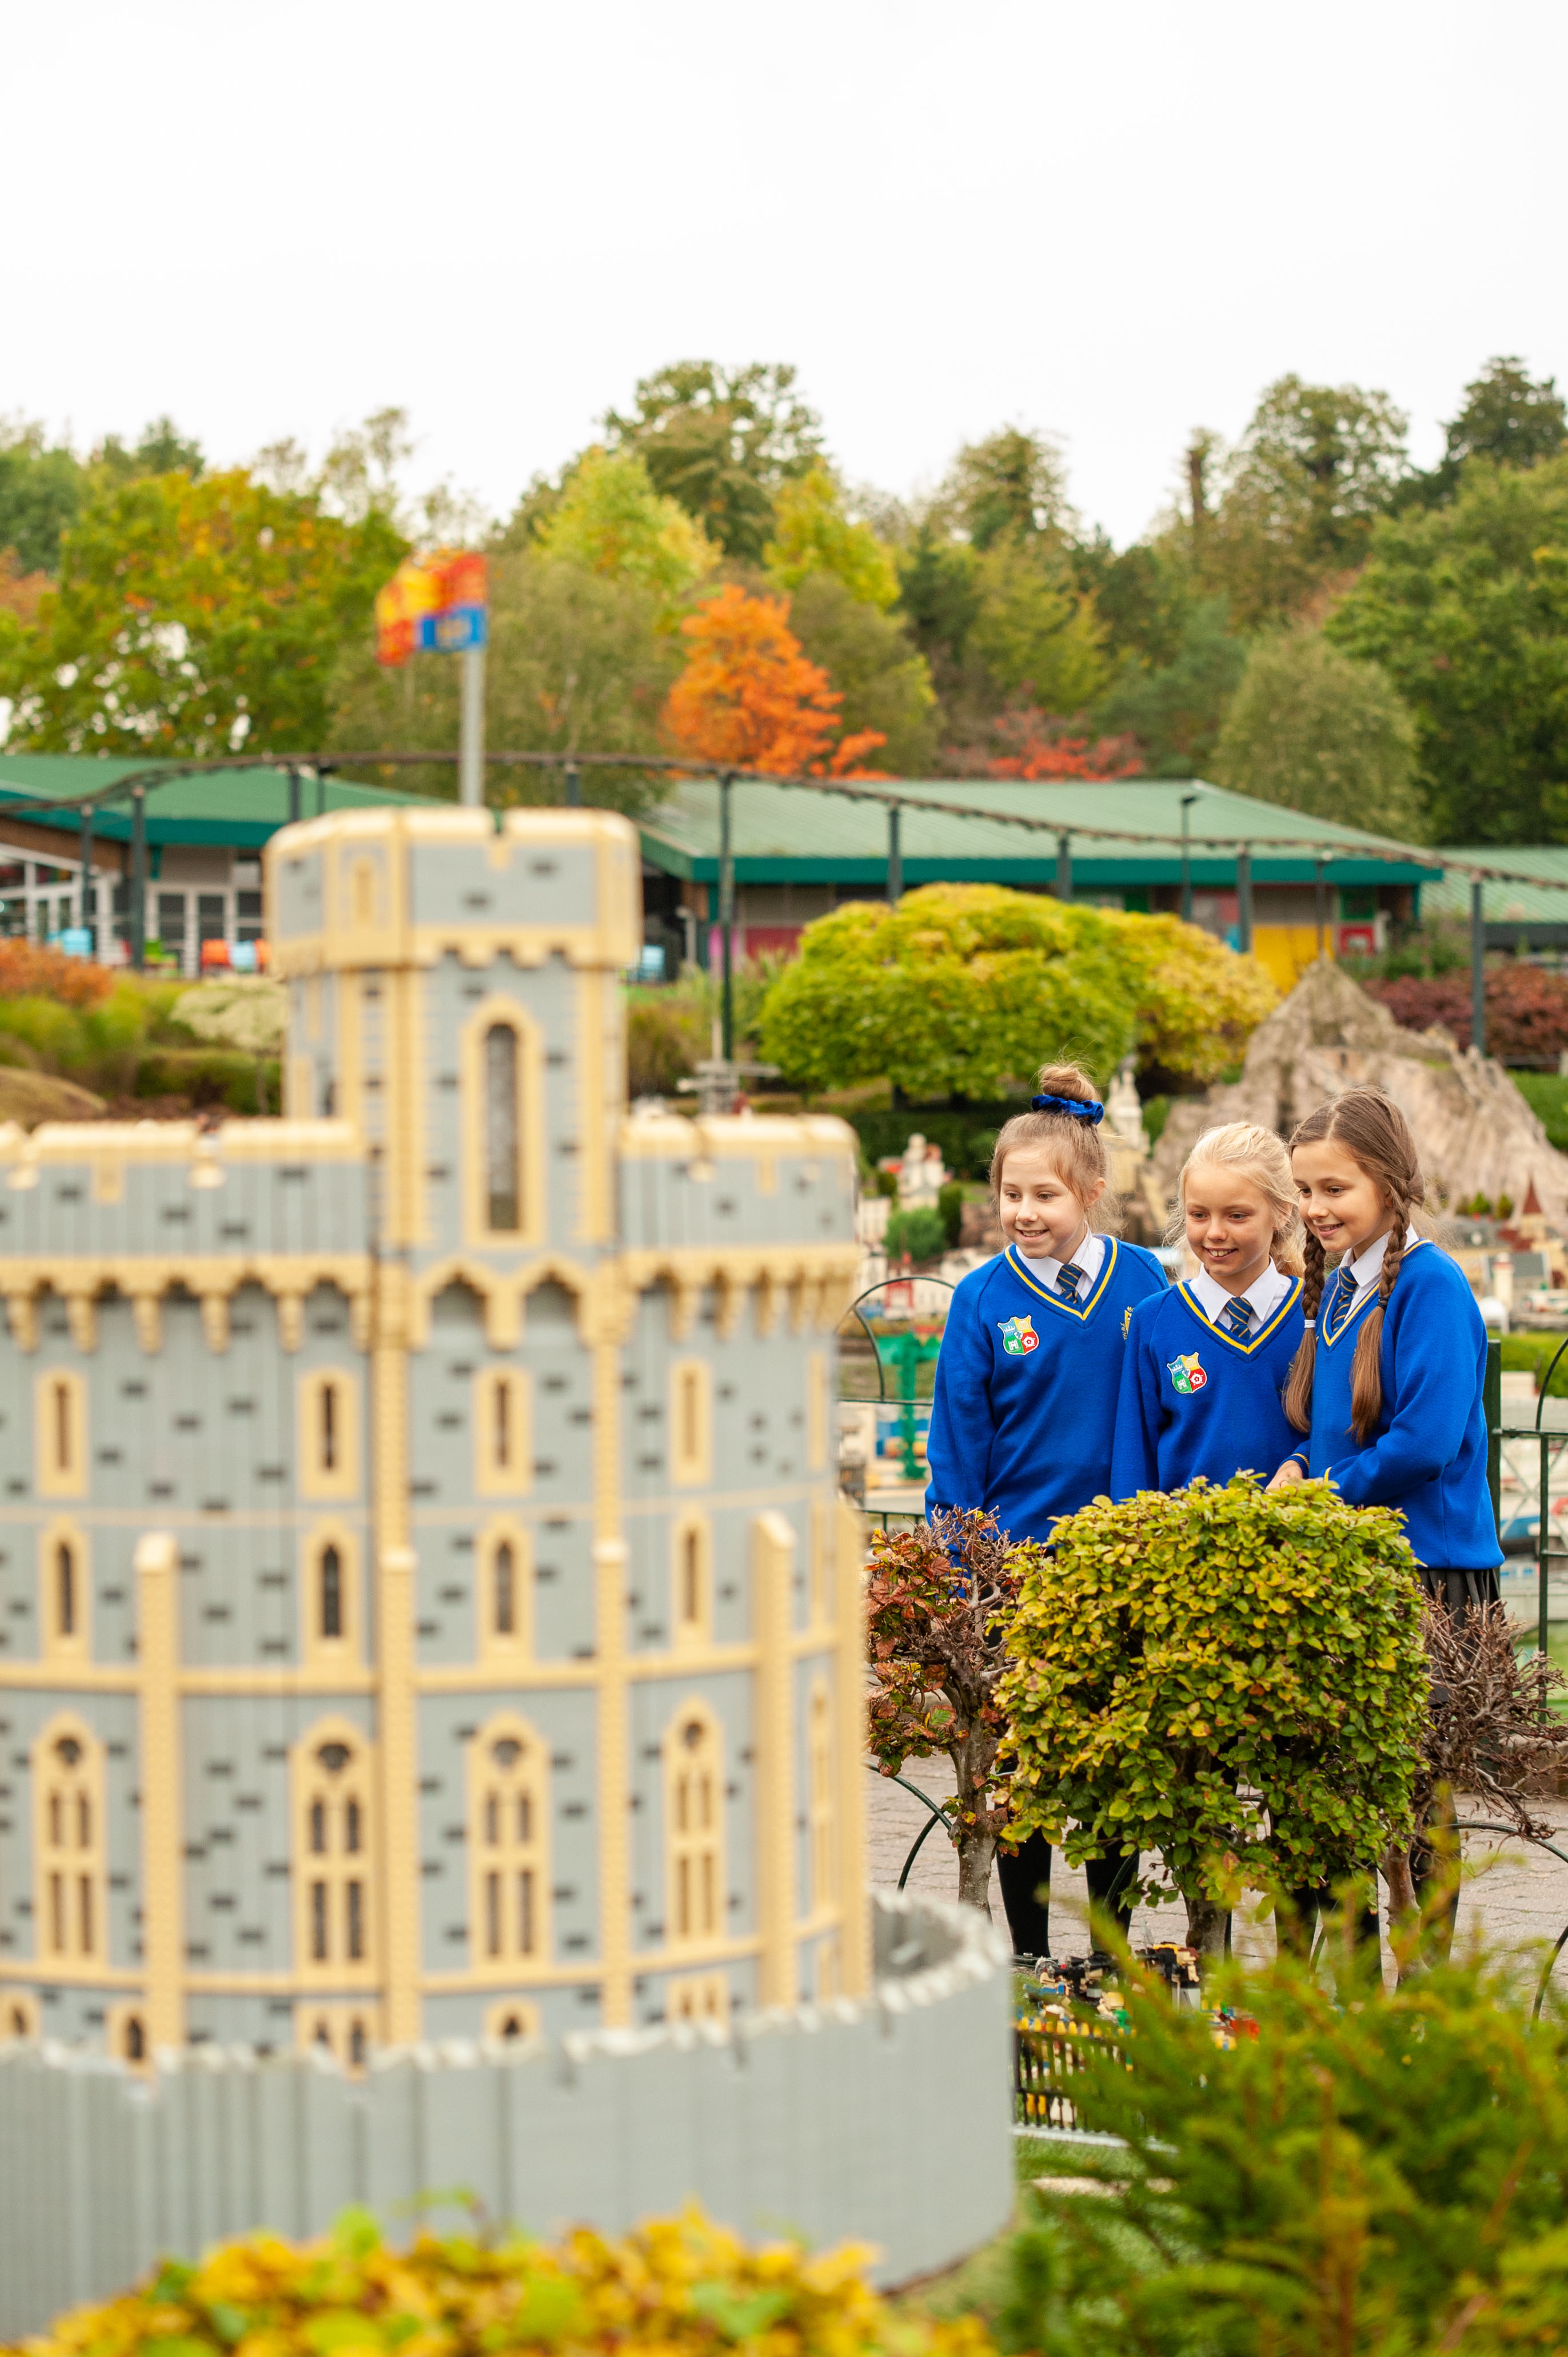 School Group looking at Miniland at the LEGOLAND Windsor Resort